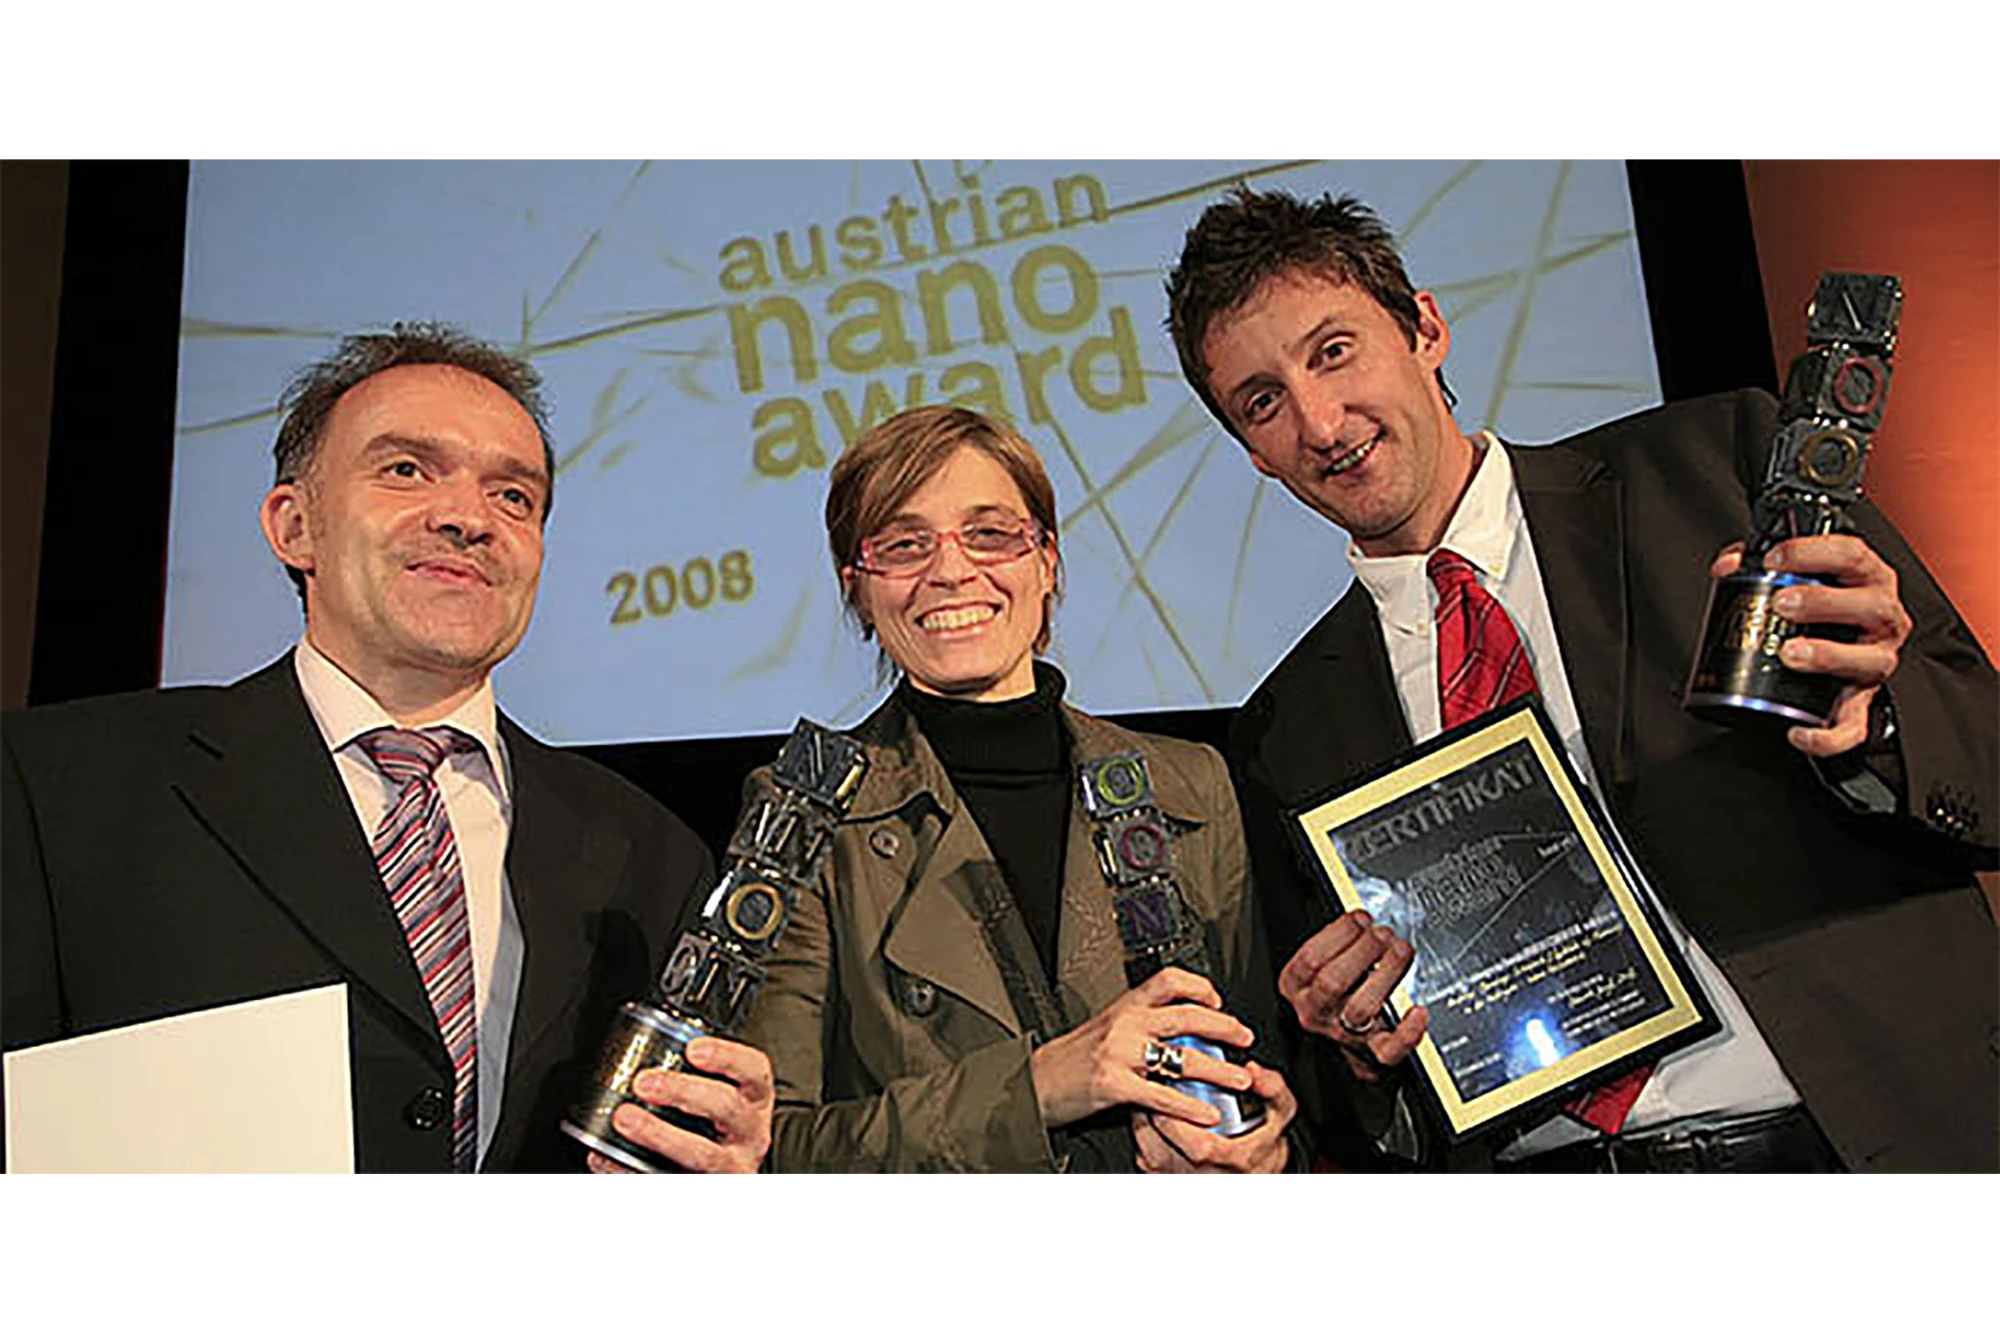 Austrian Nonobusiness Award